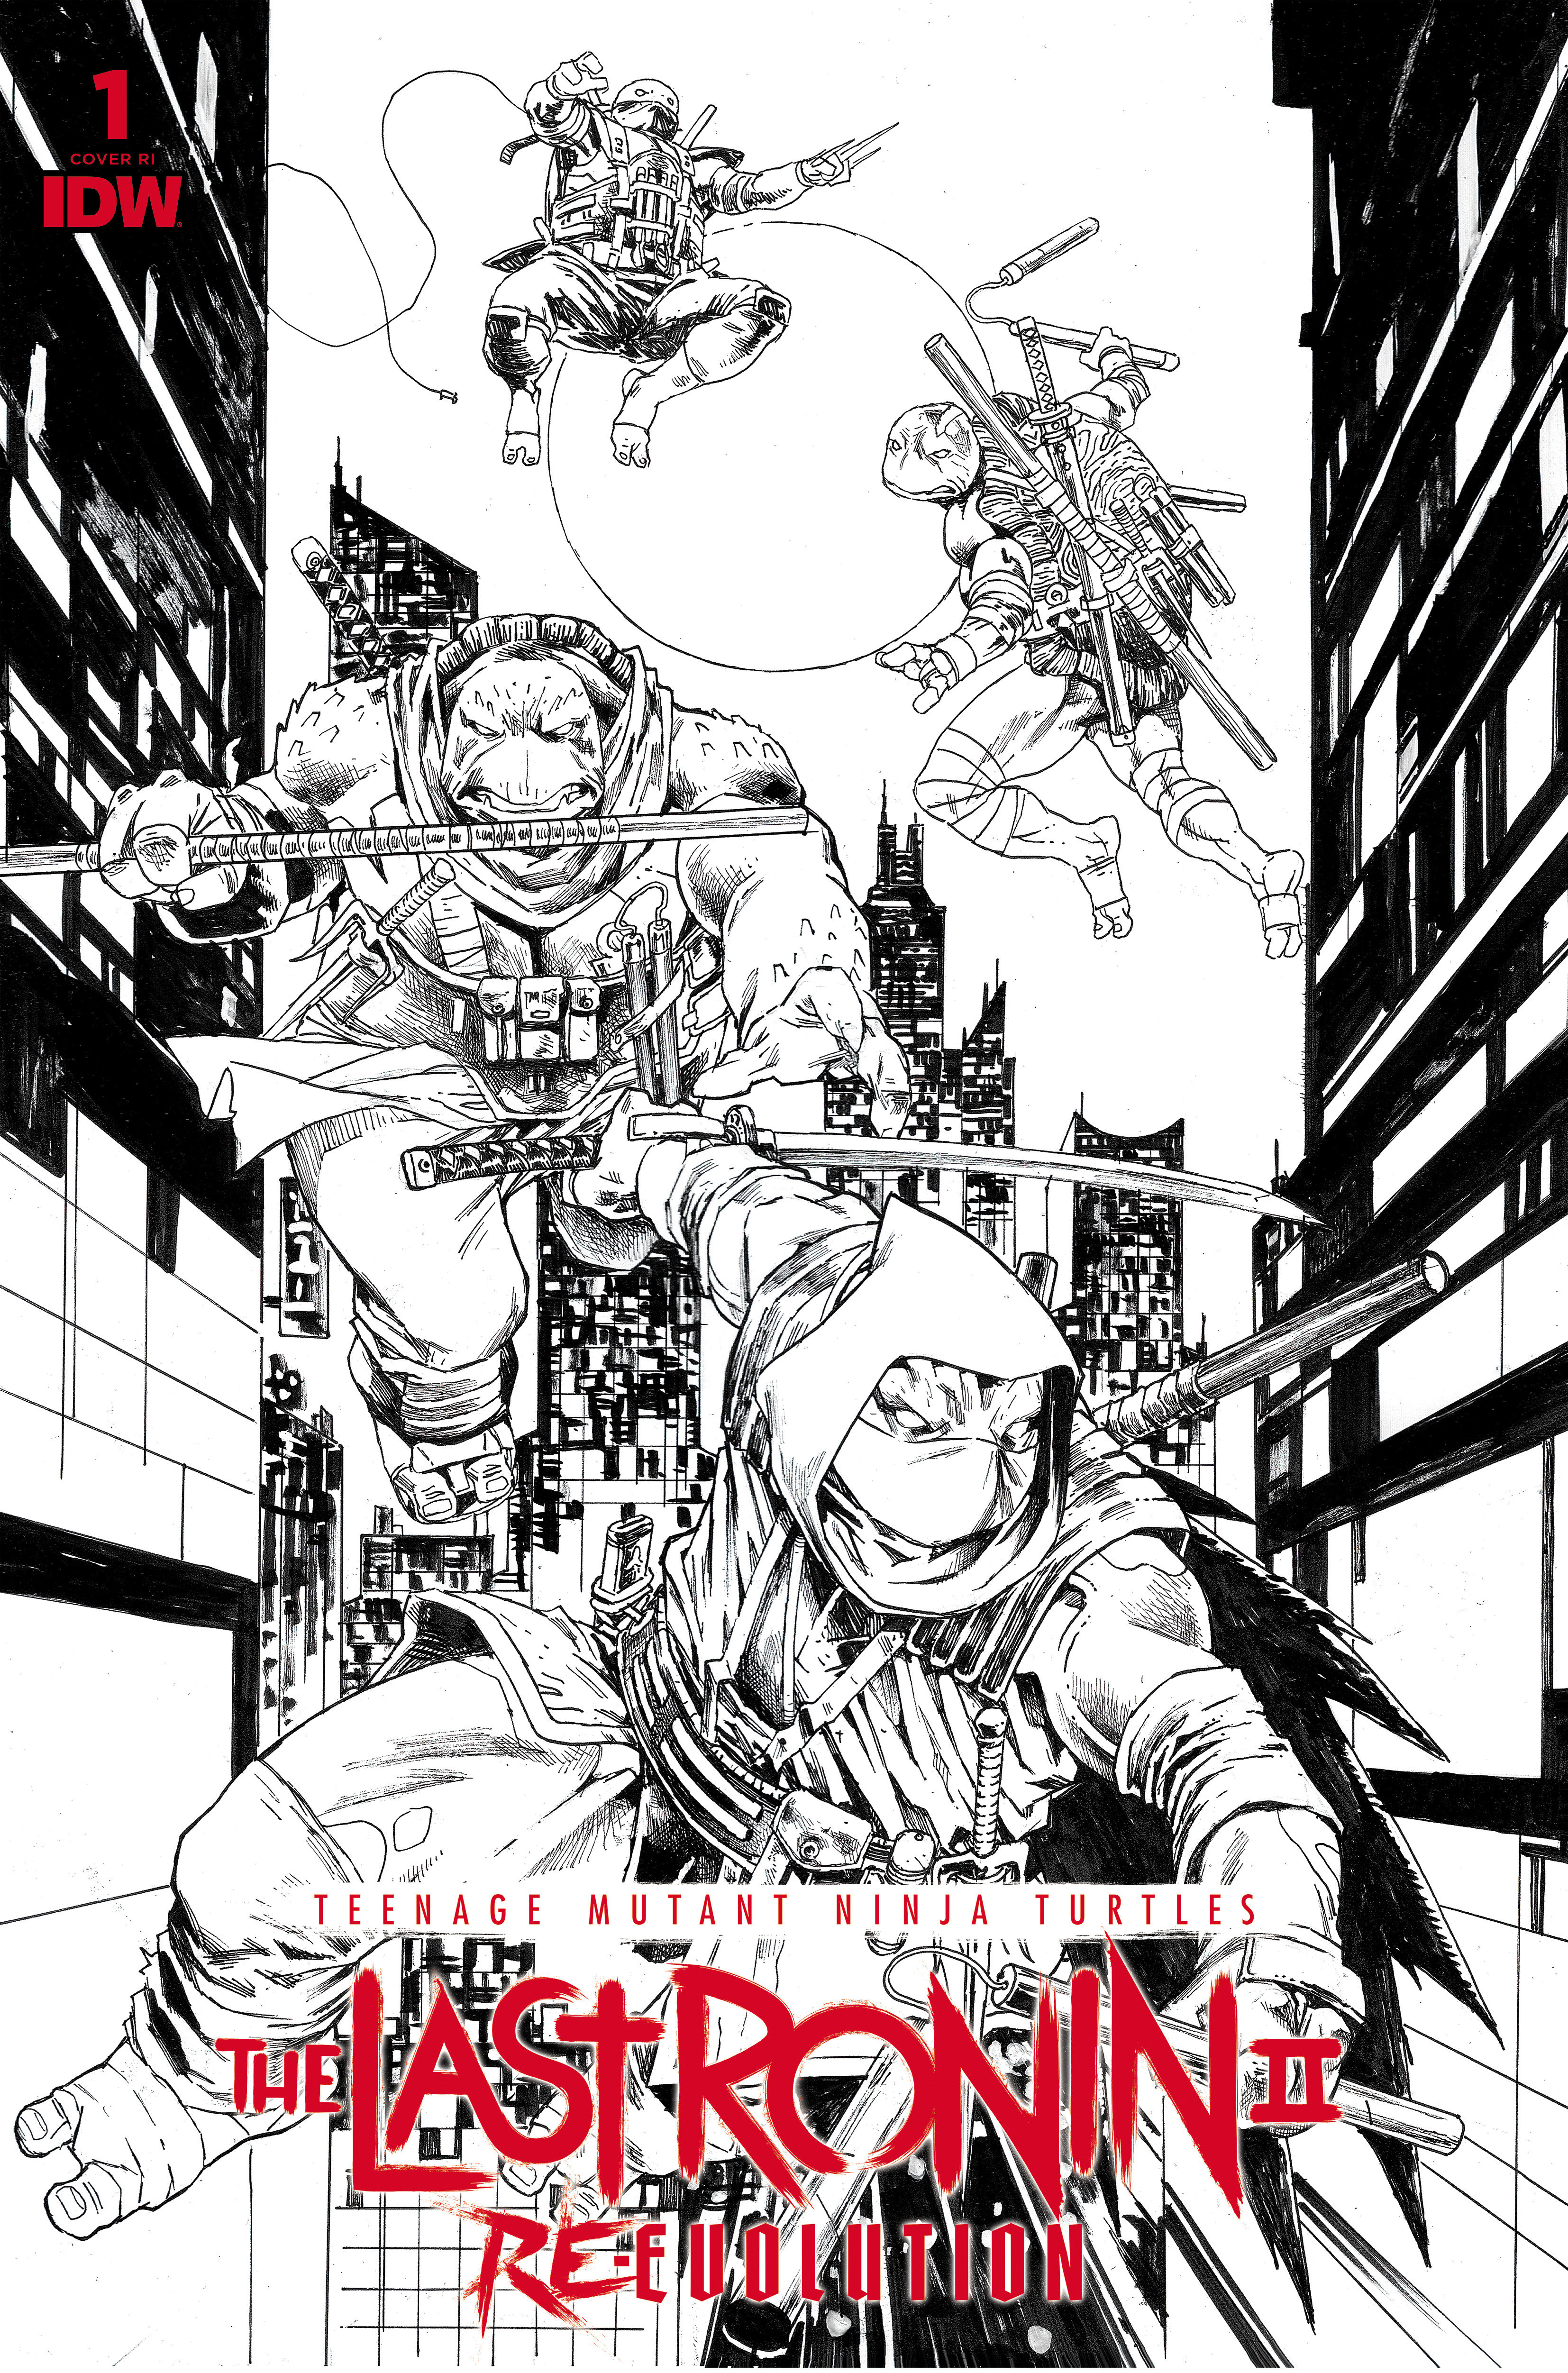 Teenage Mutant Ninja Turtles: The Last Ronin II Re-Evolution #1 Cover Escorzas B&W 1 for 75 Variant (2023)